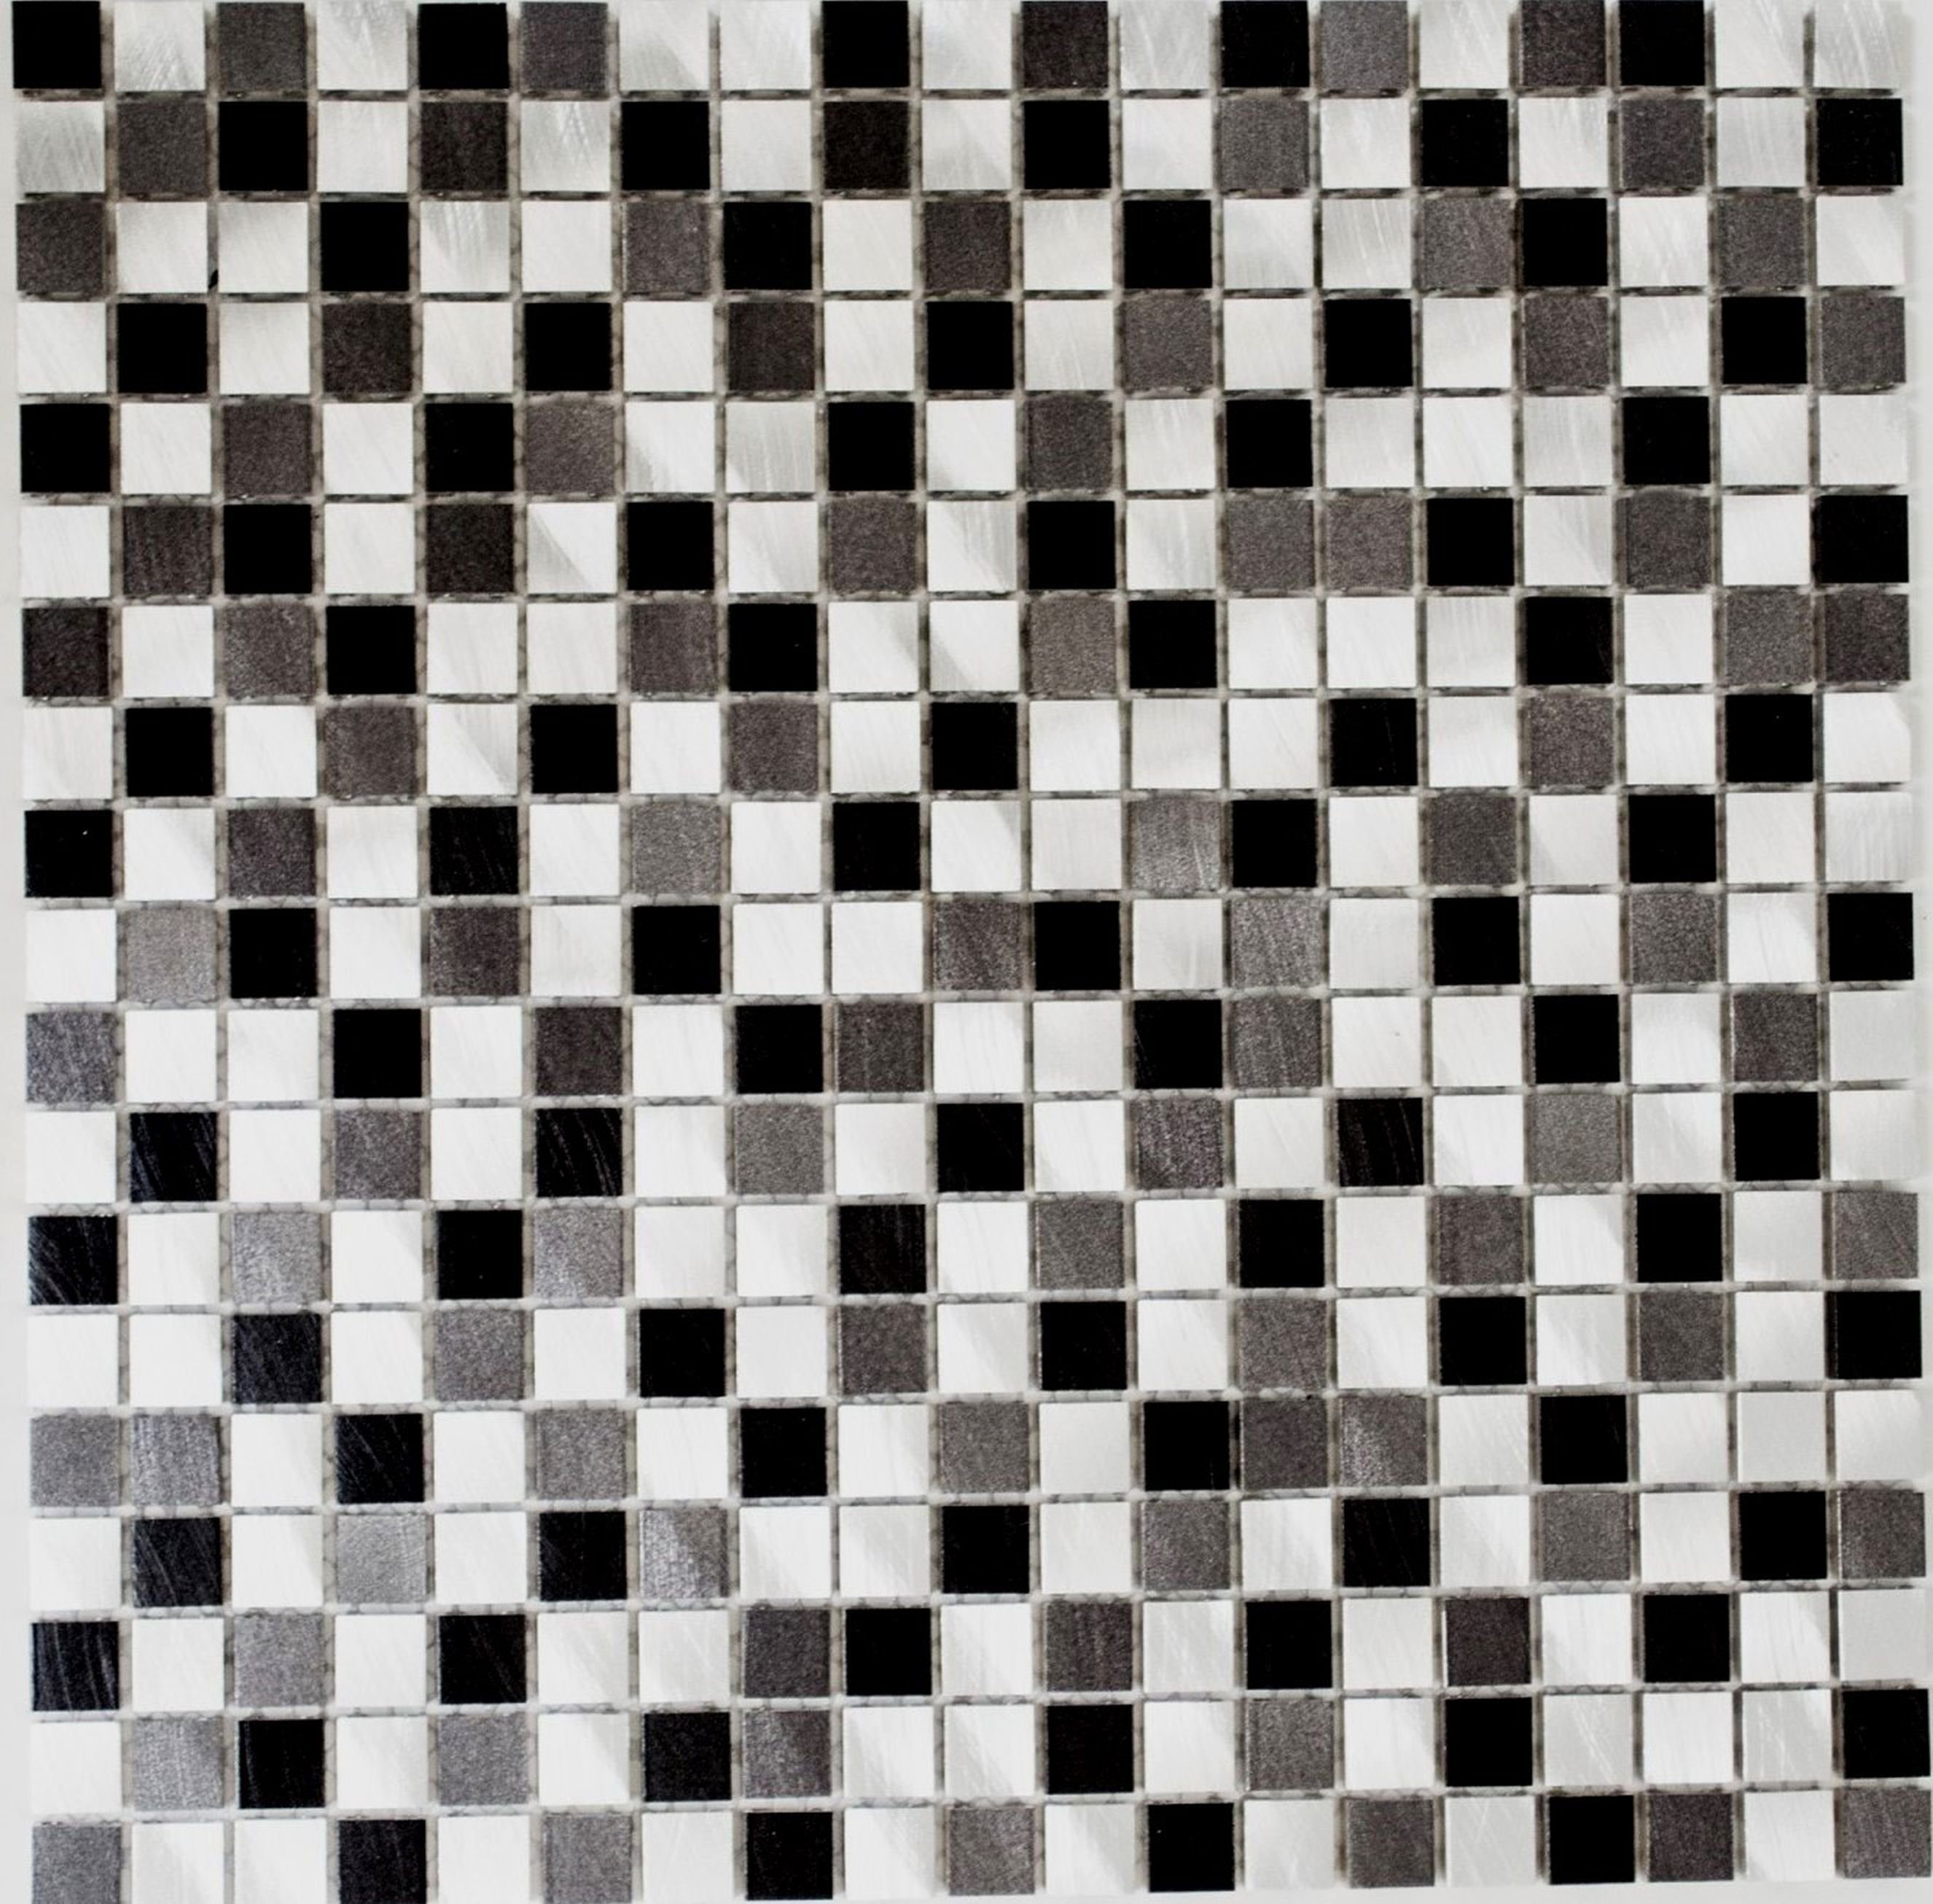 Mosani Mosaikfliesen Mosaik Fliese Aluminium grau schwarz Fliesenspiegel Küchenwand